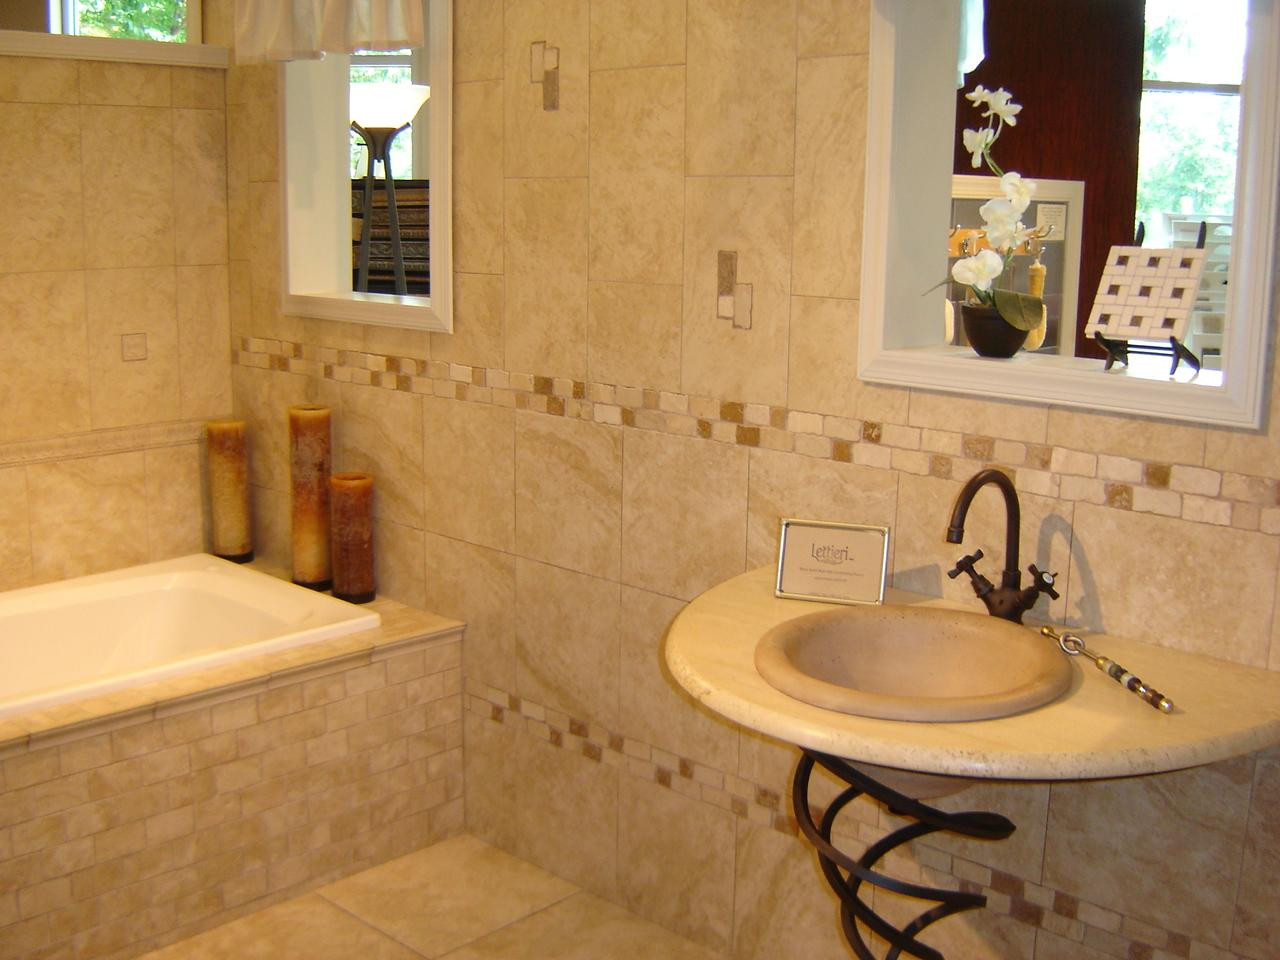 Tile Designs For Bathrooms
 Bathroom Tile Design Ideas